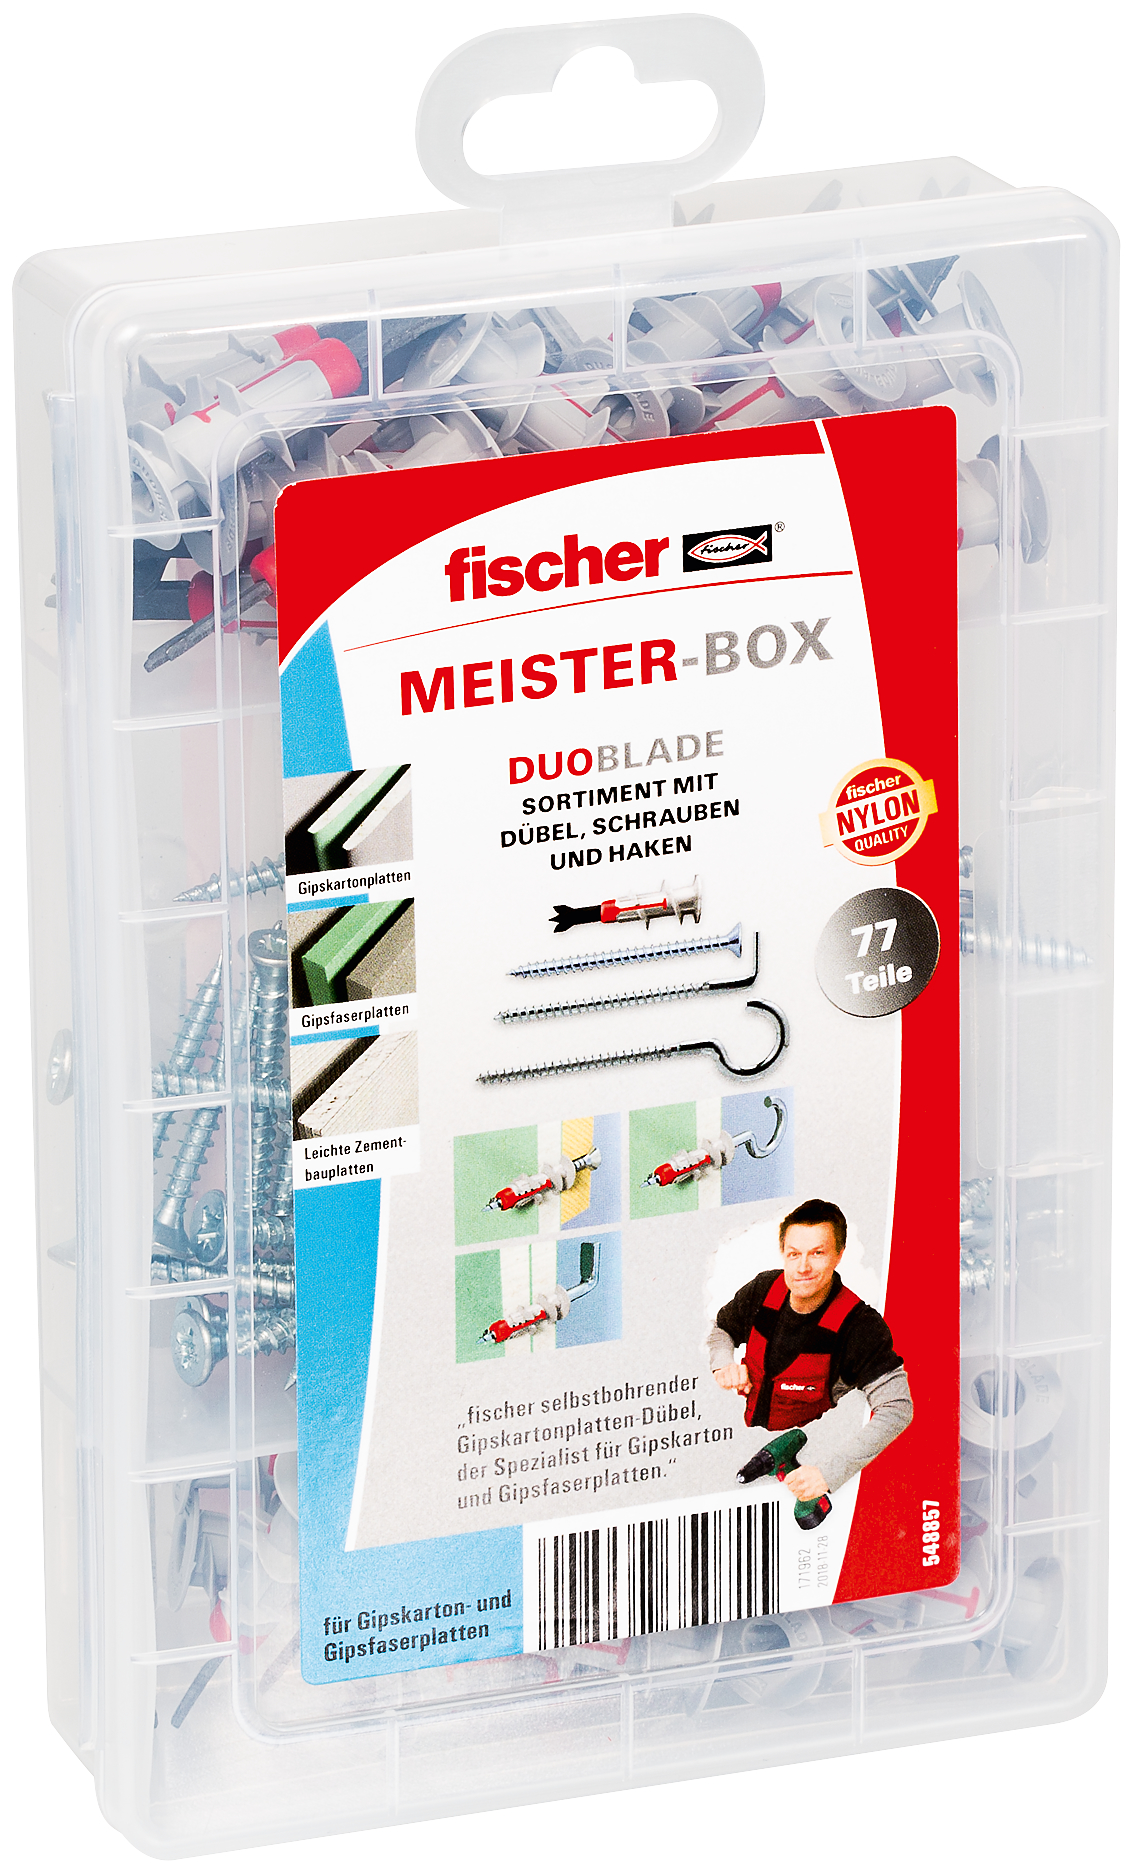 fischer Meister-Box DuoBlade